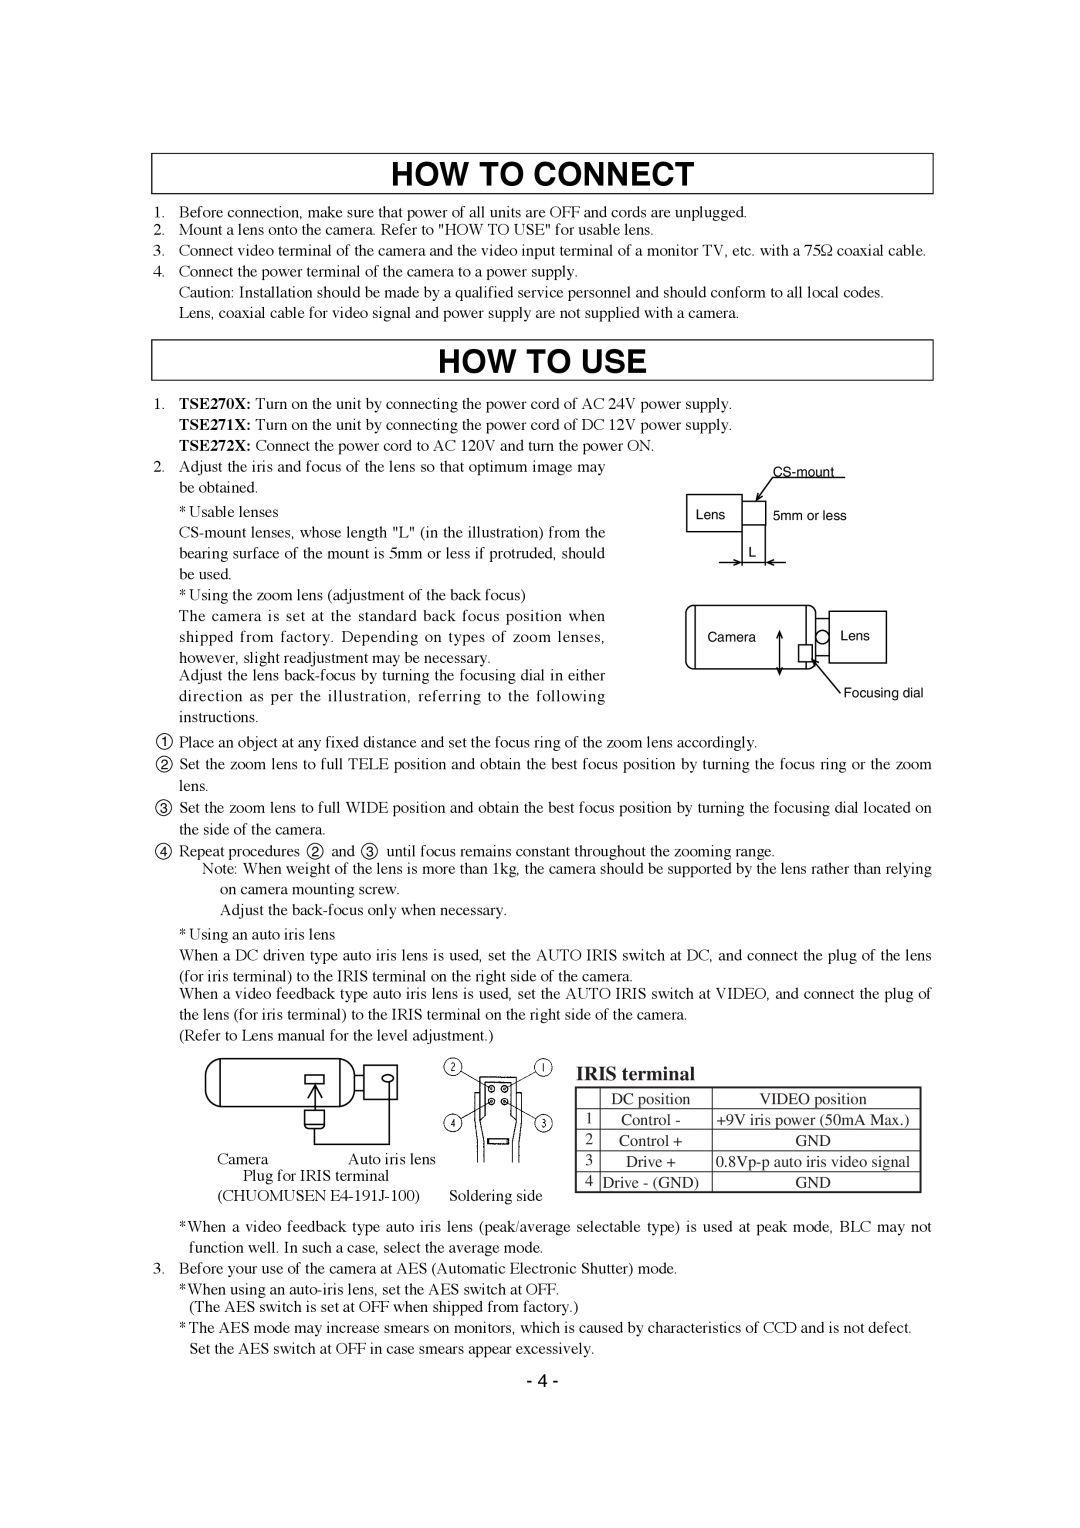 Elmo TSE271X, TSE272X, TSE270X instruction manual How To Connect, How To Use, IRIS terminal 